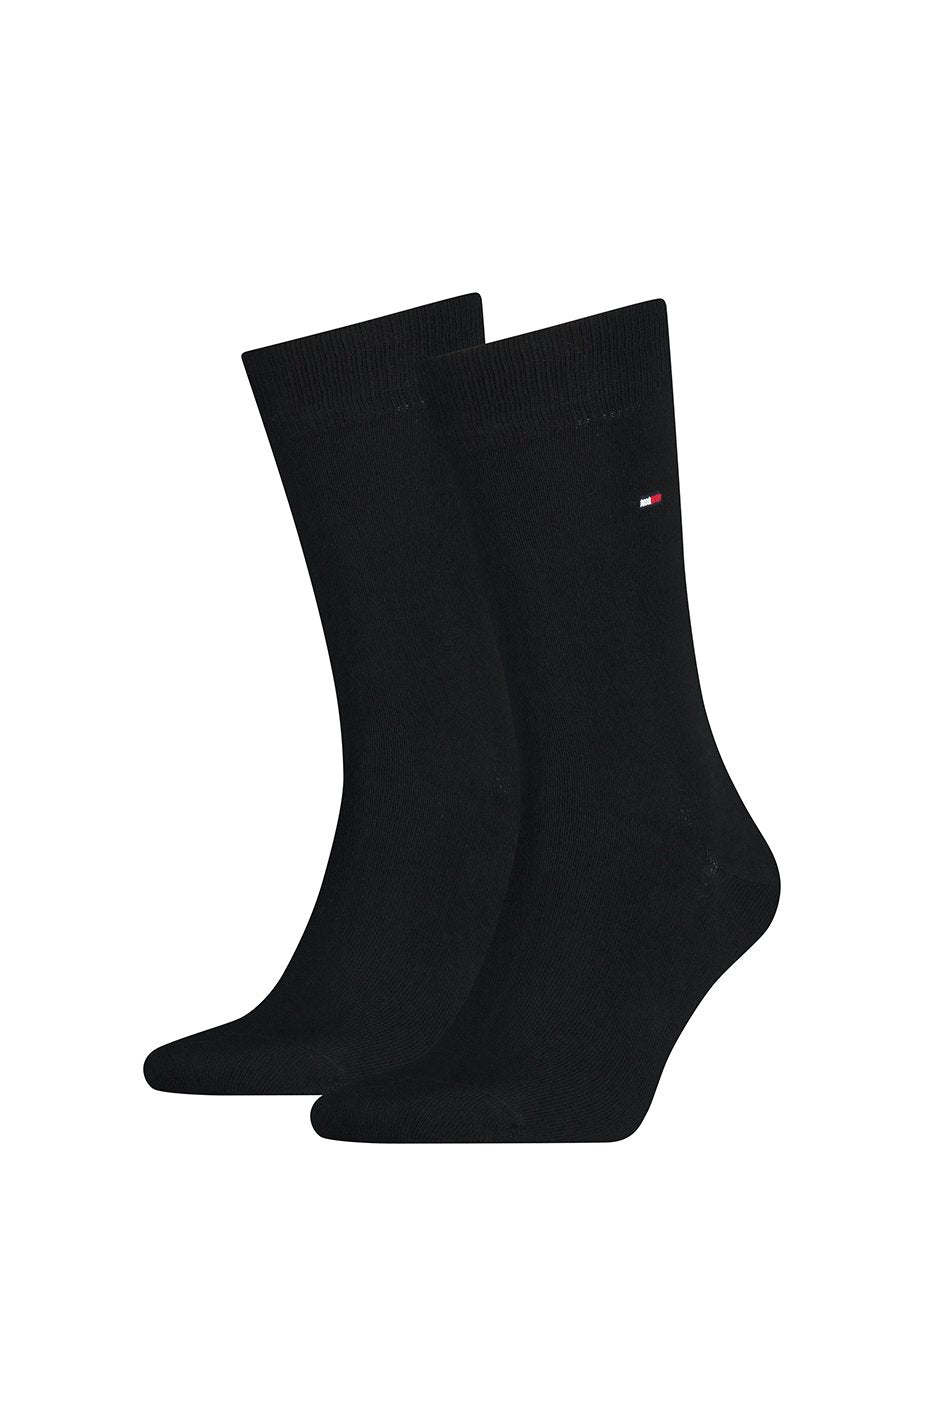 Tommy Hilfiger 2 Pack Men's Classic Socks